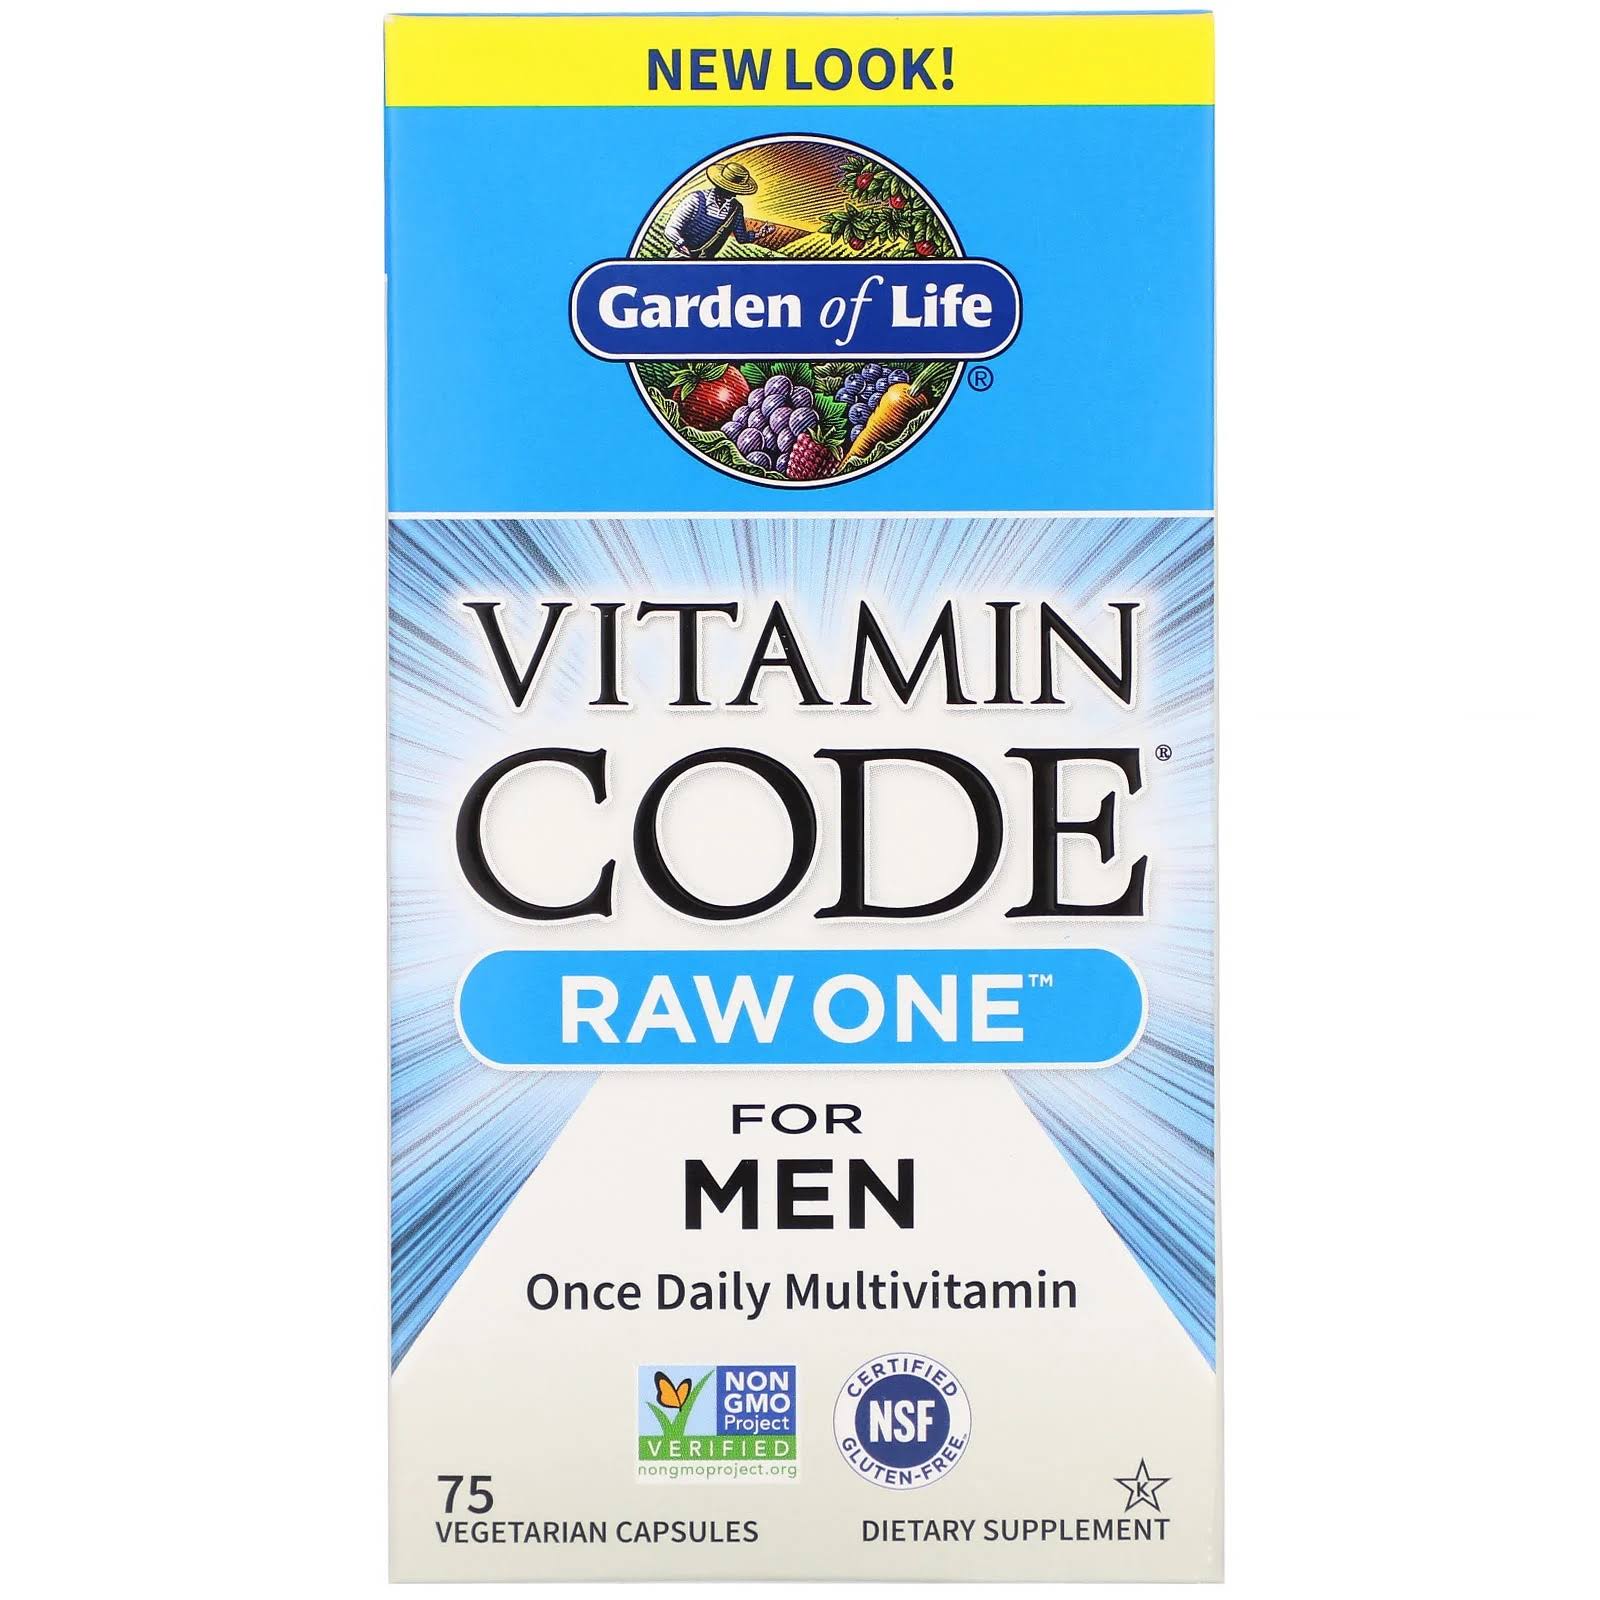 Garden of Life Vitamin Code Raw One for Men Dietary Supplement - 75 Vegetarian Capsules